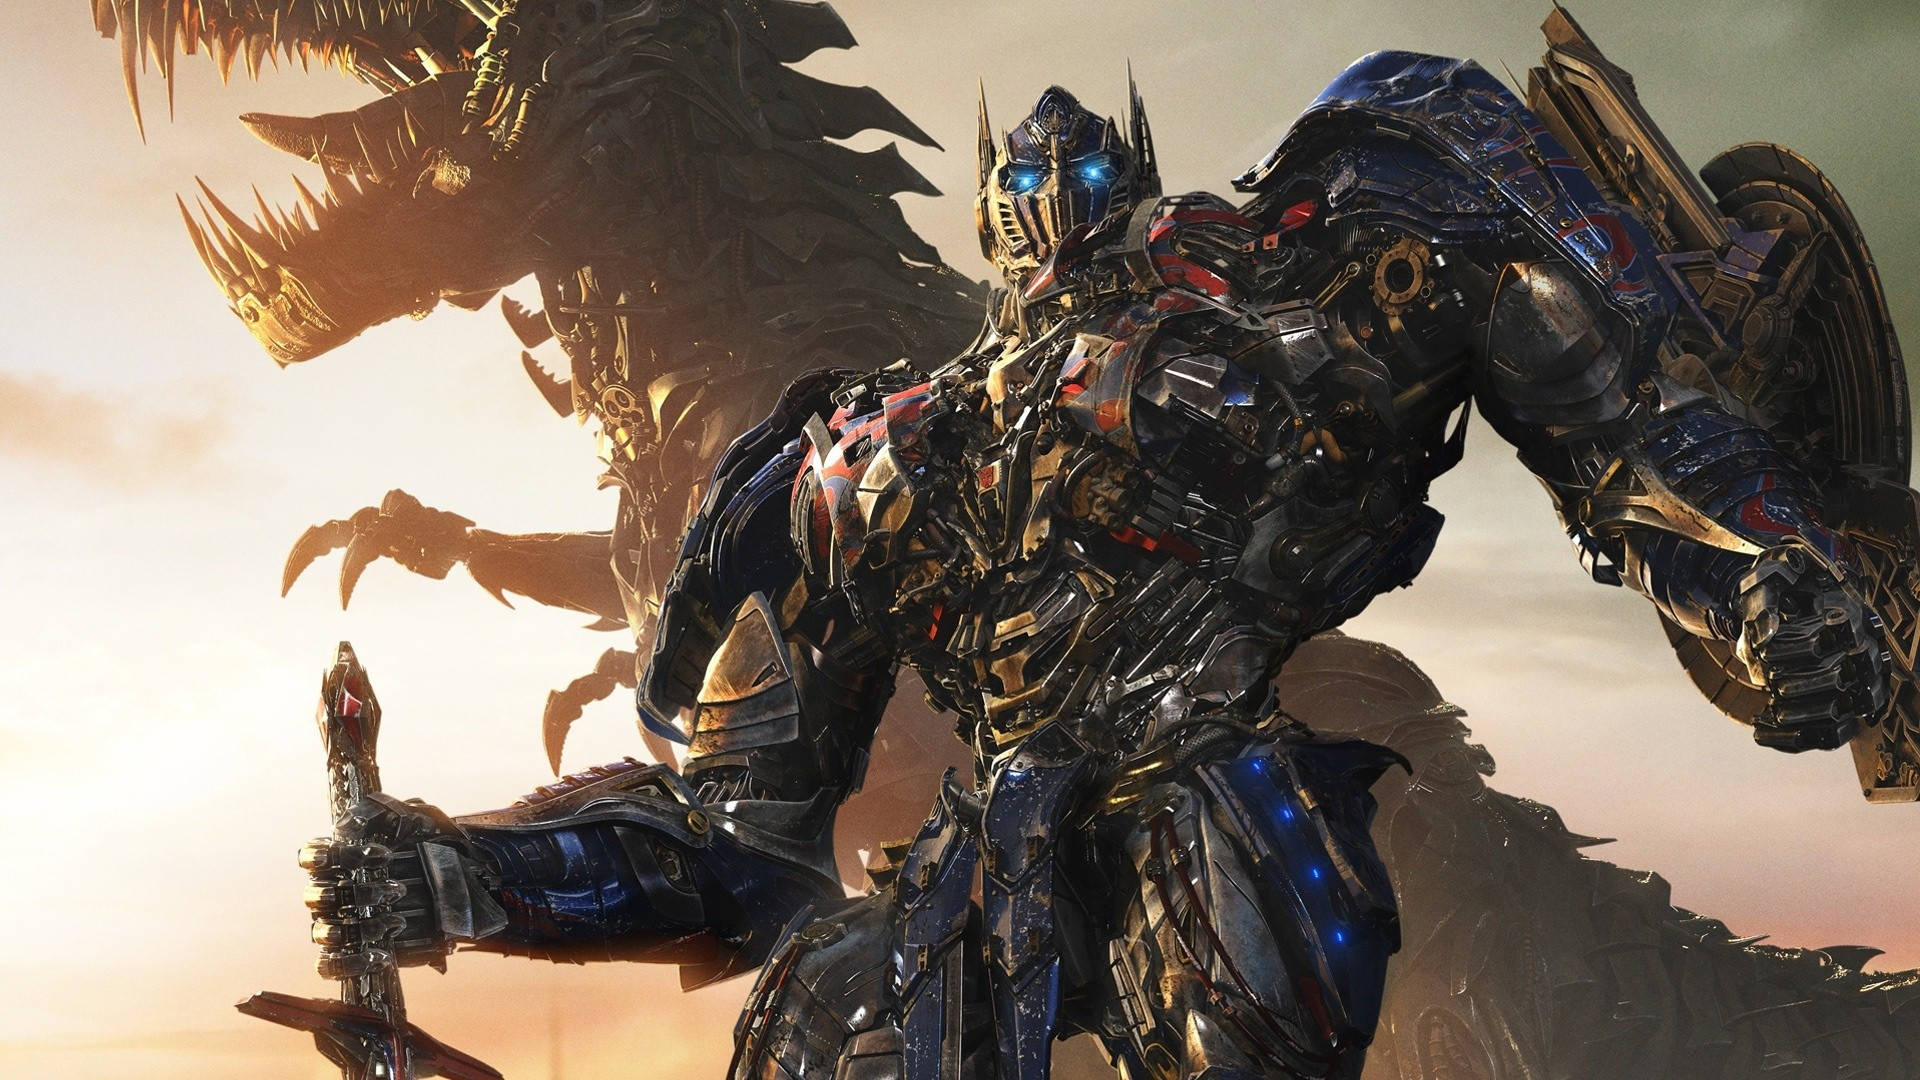 Epic Battle - Transformers Prime Optimus Prime Versus Megatron Wallpaper